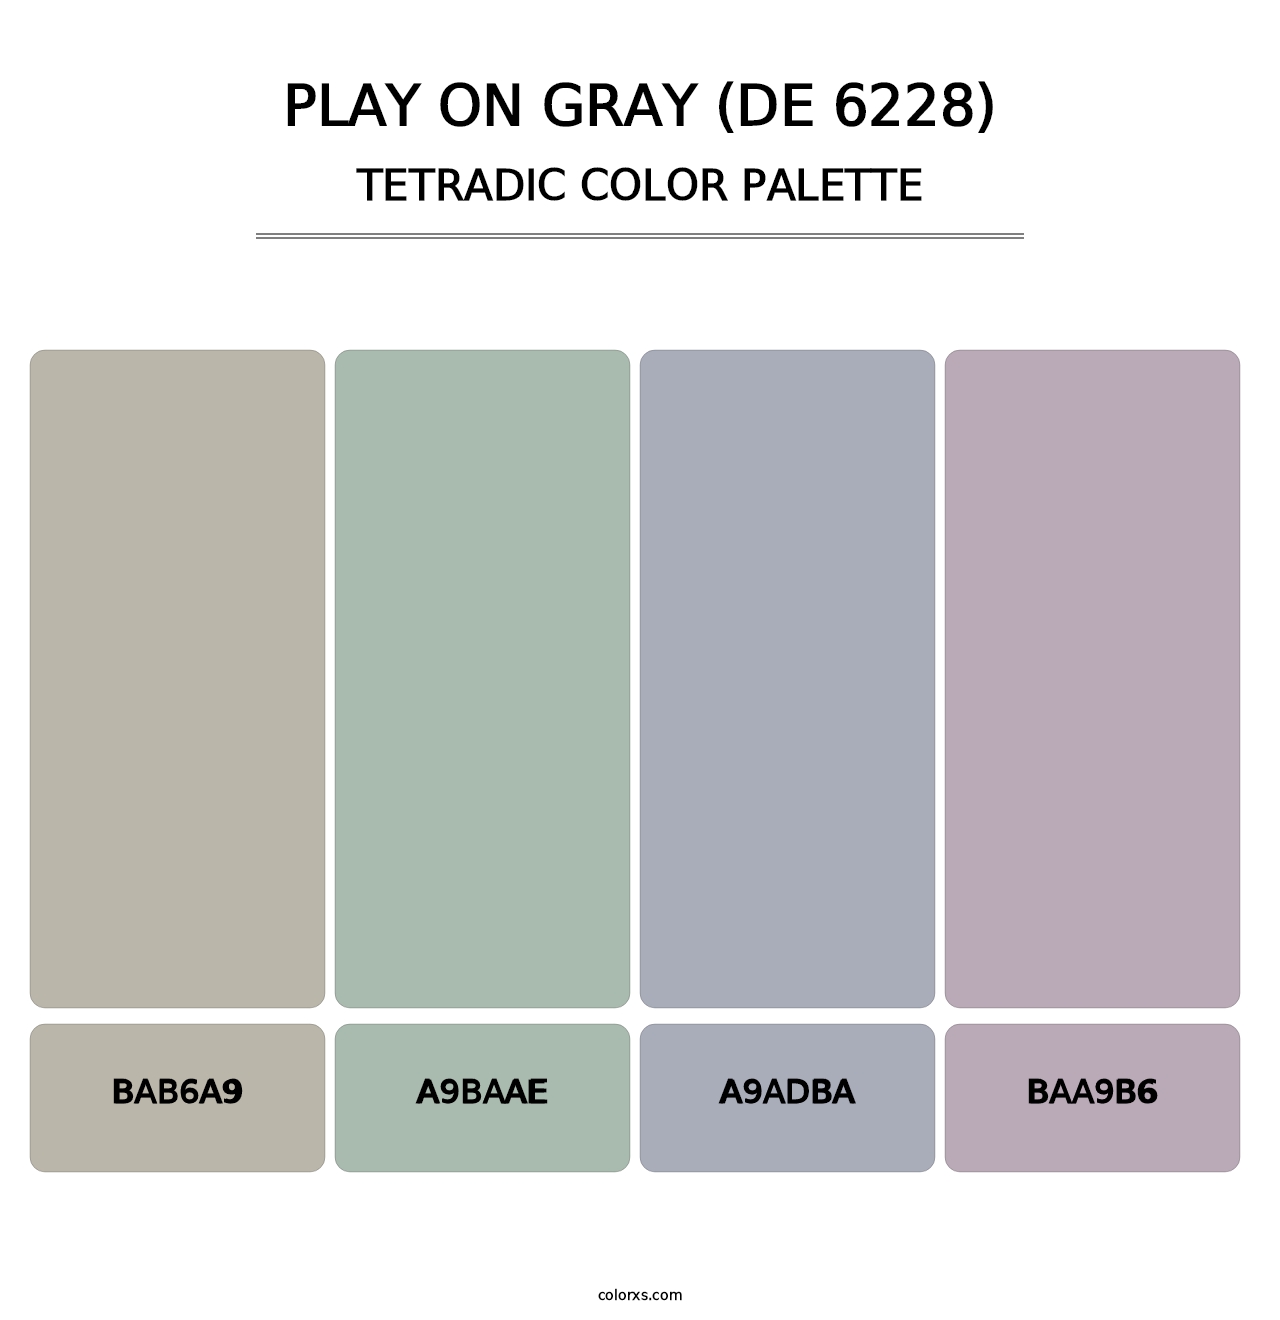 Play on Gray (DE 6228) - Tetradic Color Palette